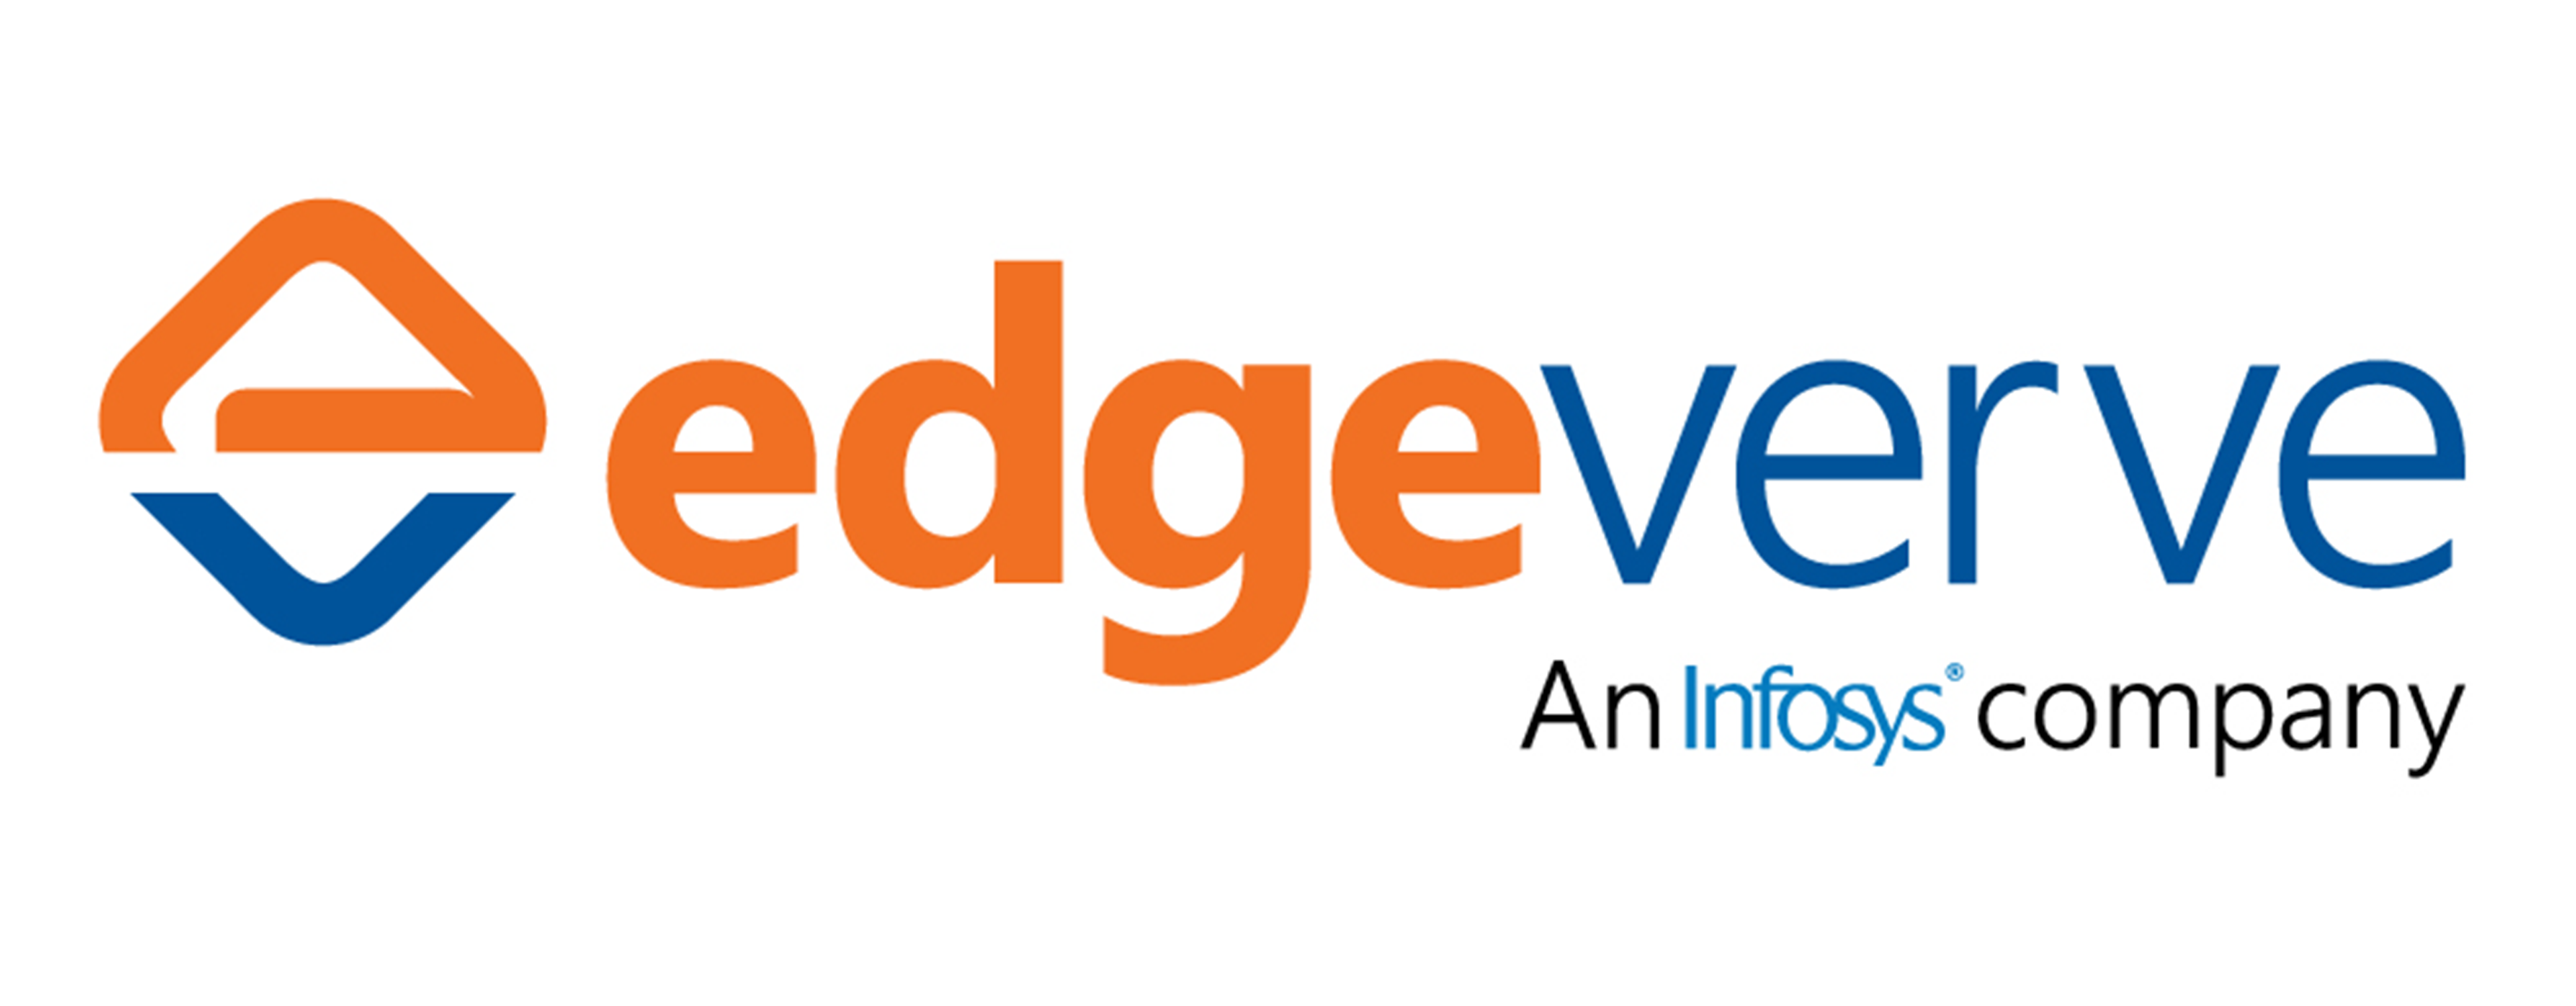             Logo EdgeVerve        